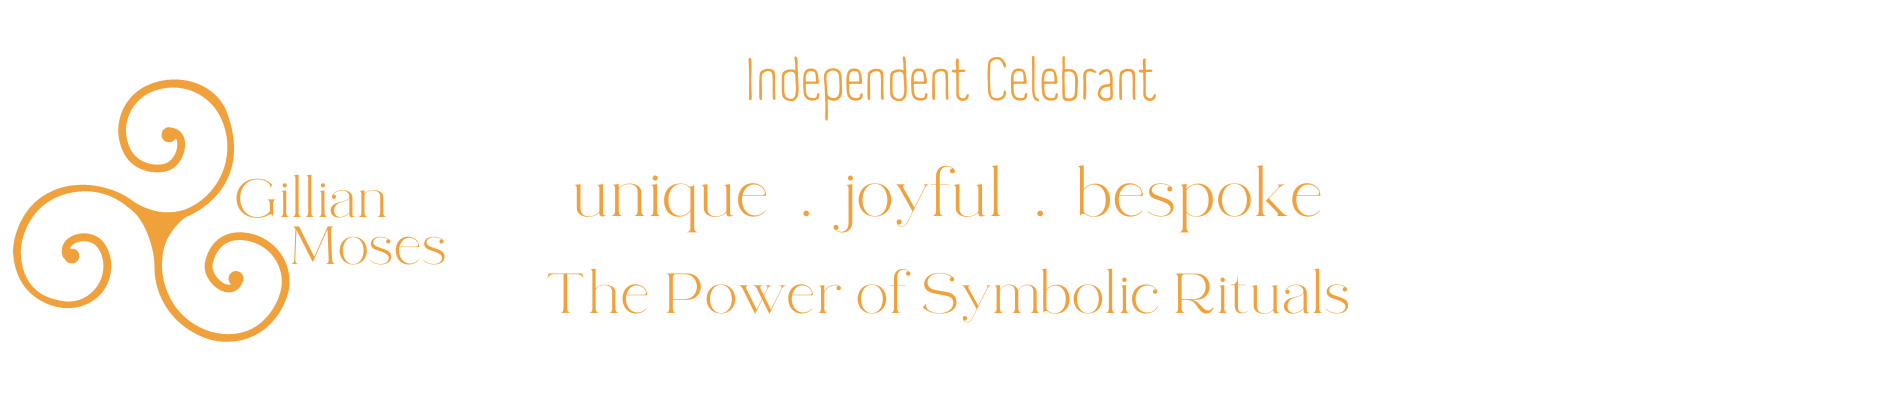 Gillian Moses Independent Celebrant offering unique, joyful, bespoke Symbolic Rituals during ceremonies